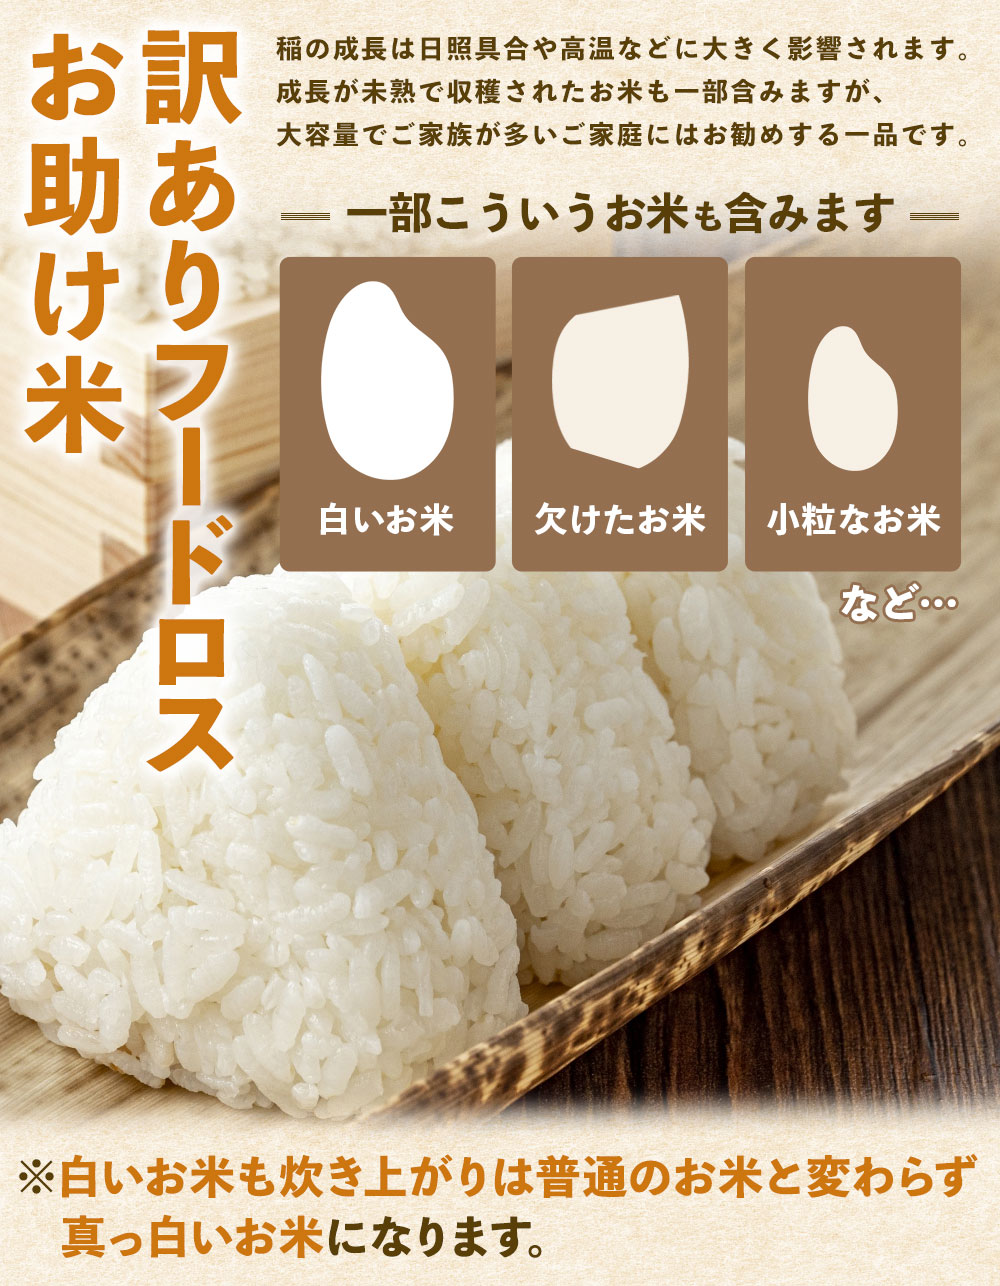 生活応援米20kg お米 白米 コスパ米 数量限定 期間限定 - 米・雑穀・粉類